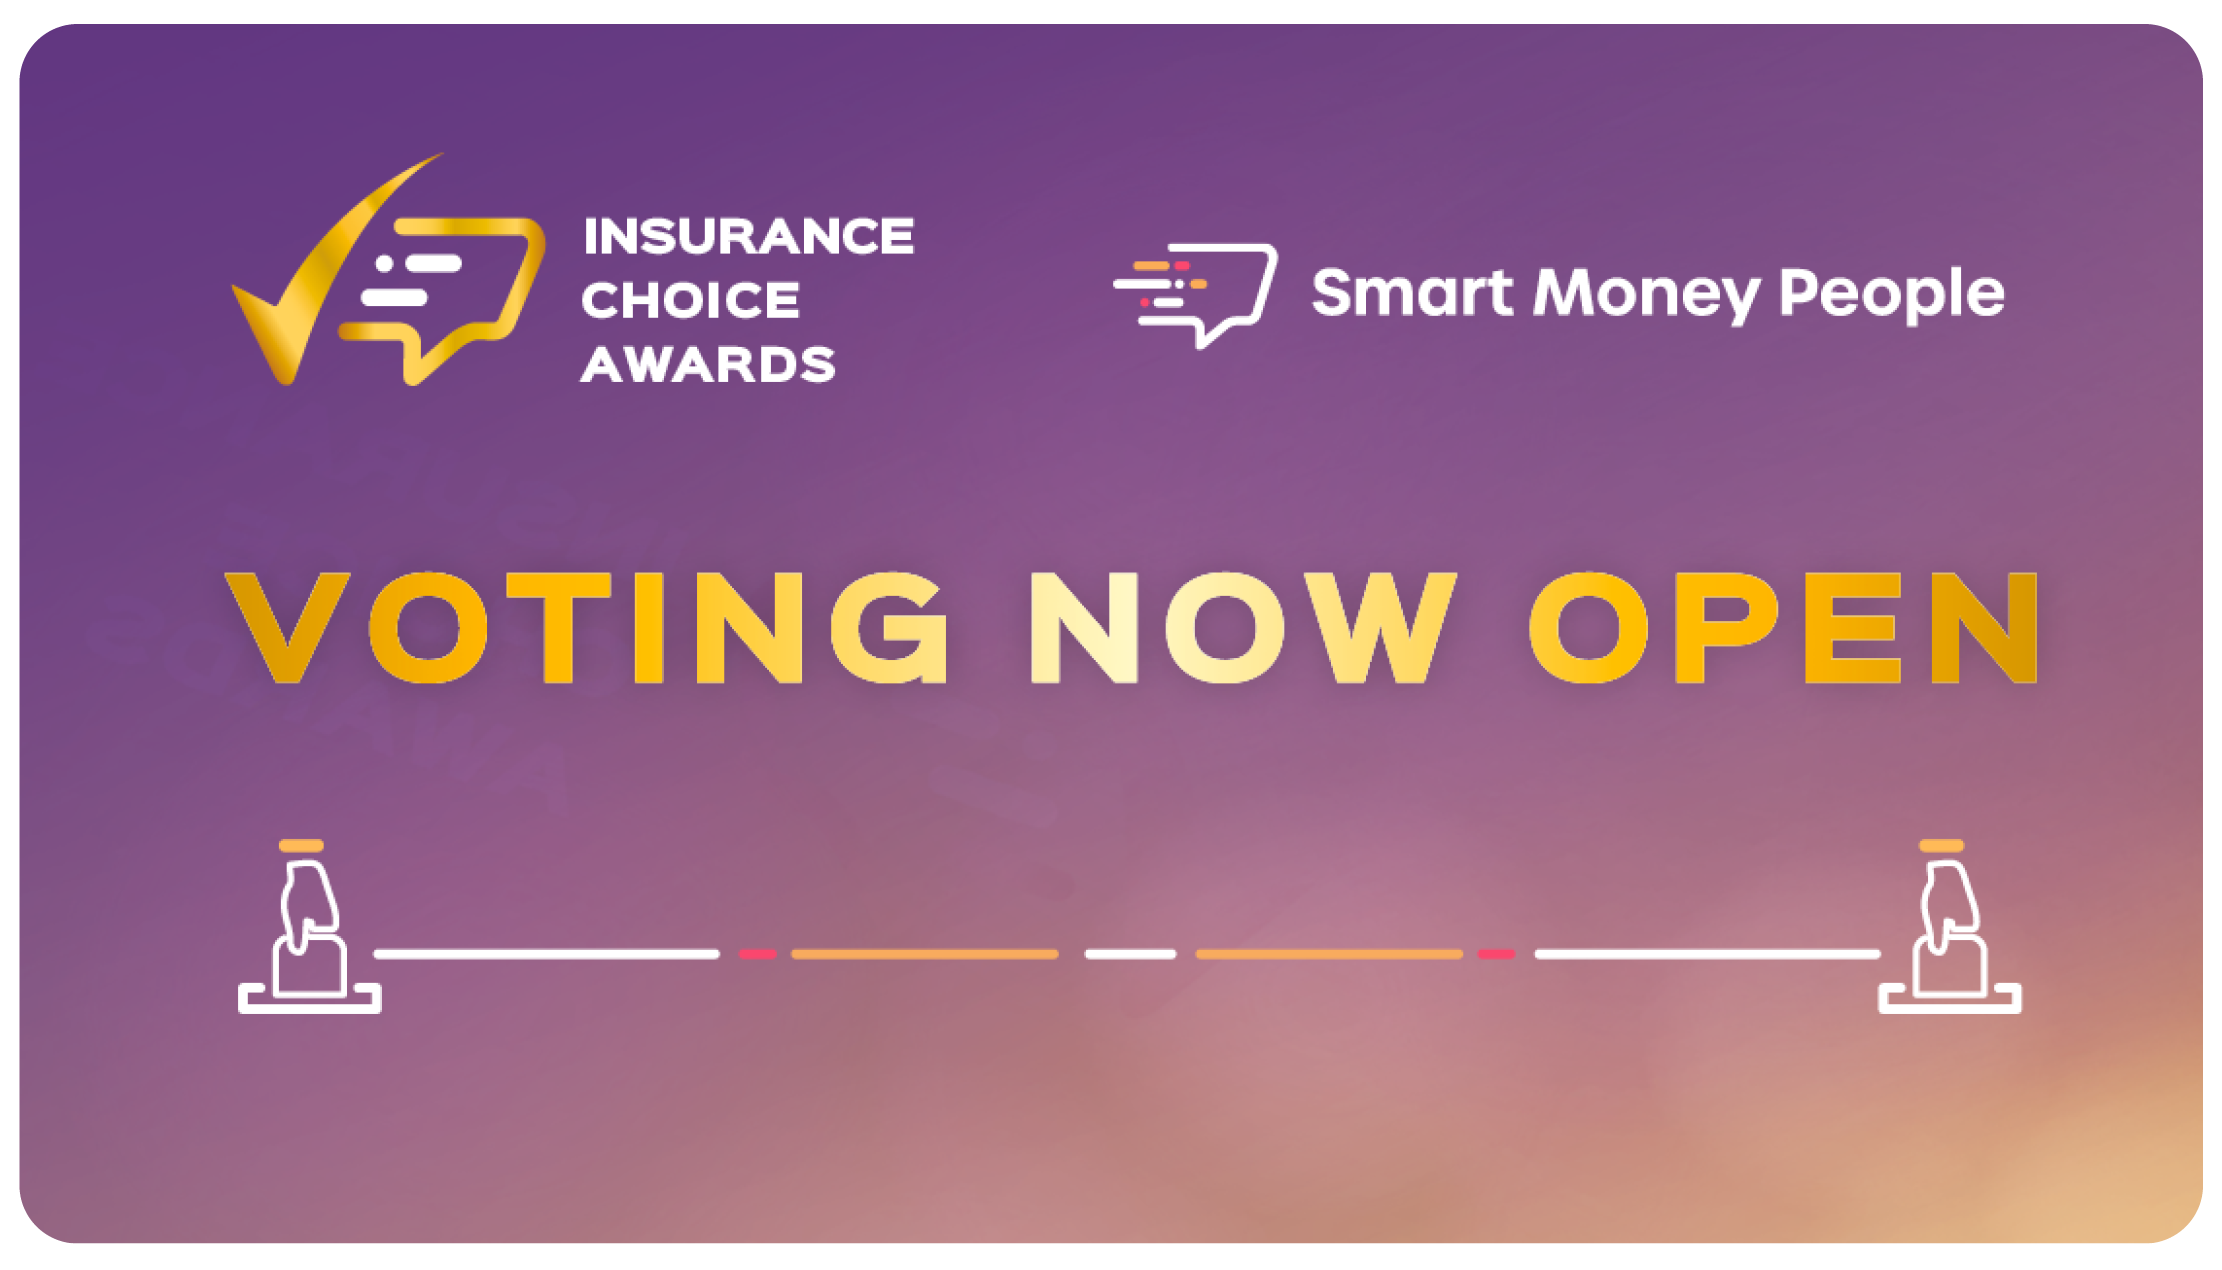 Insurance Choice Awards 2021 Now Open!